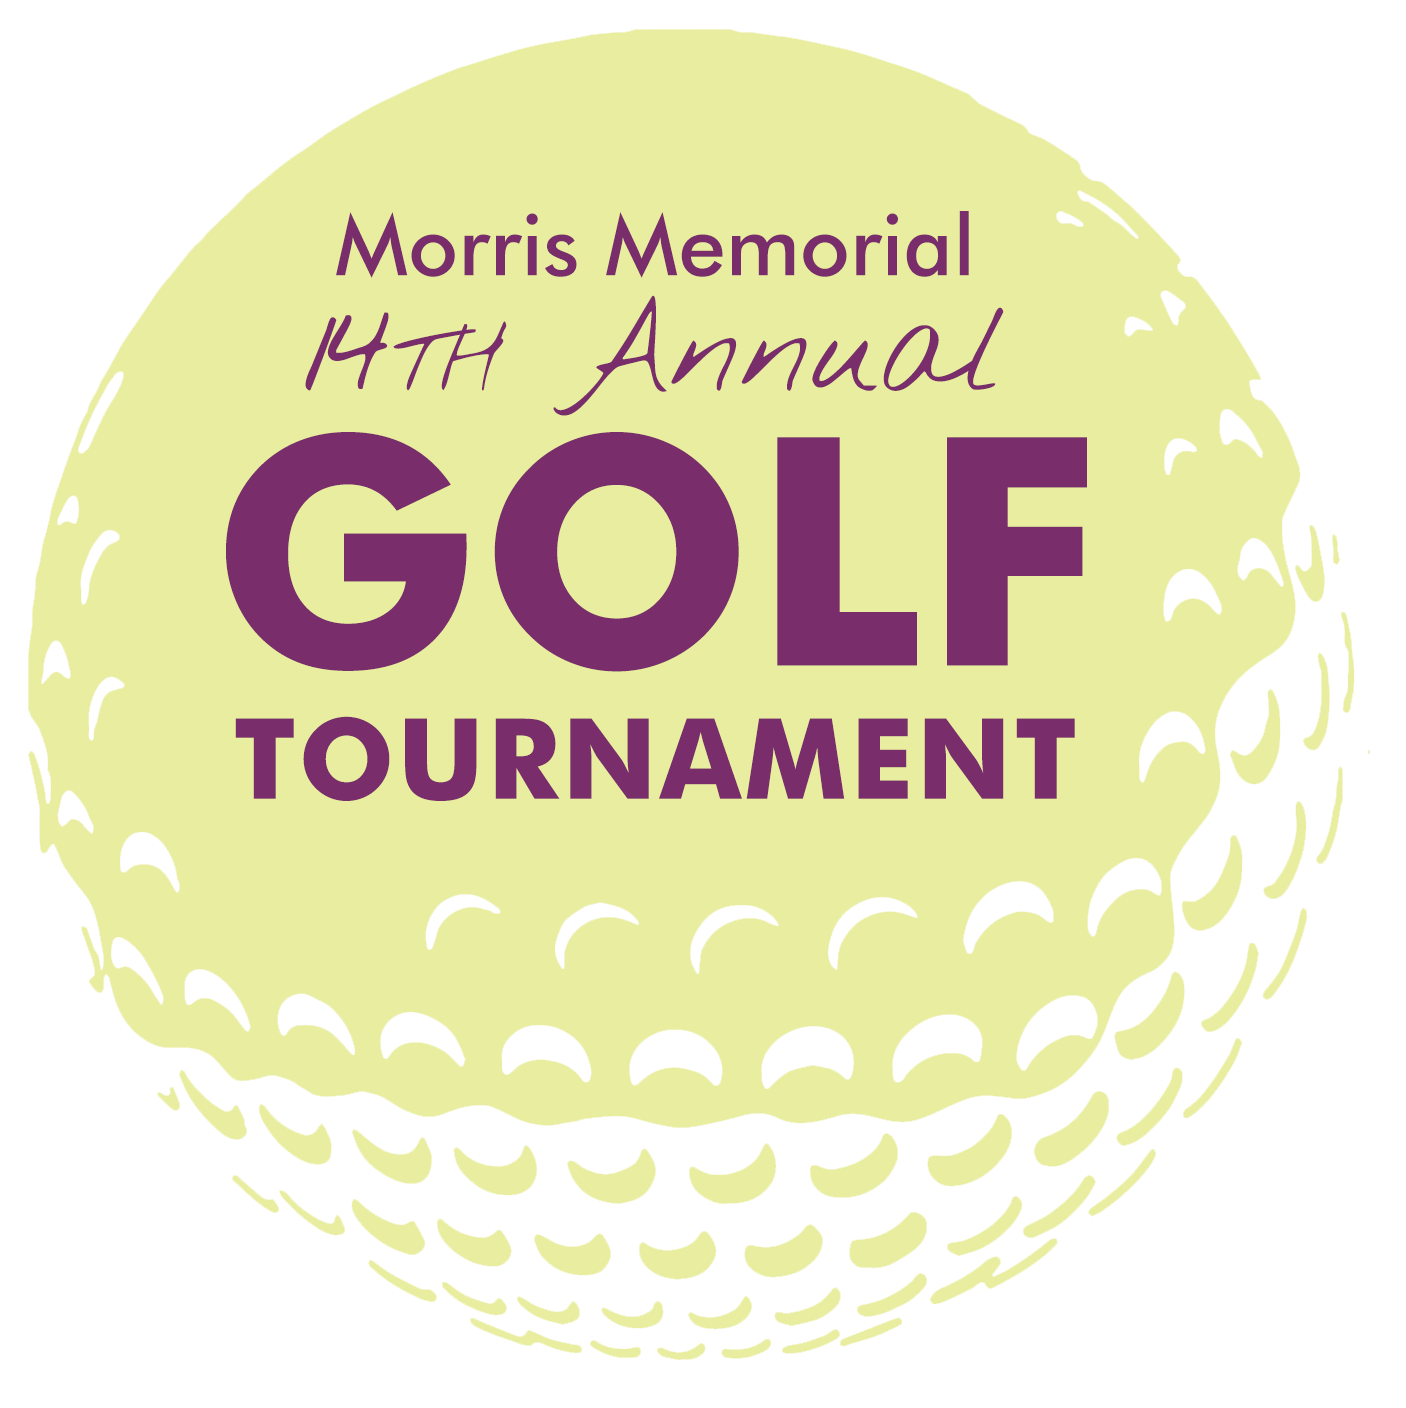 Morris memorial 14th Annual Golf Tournament